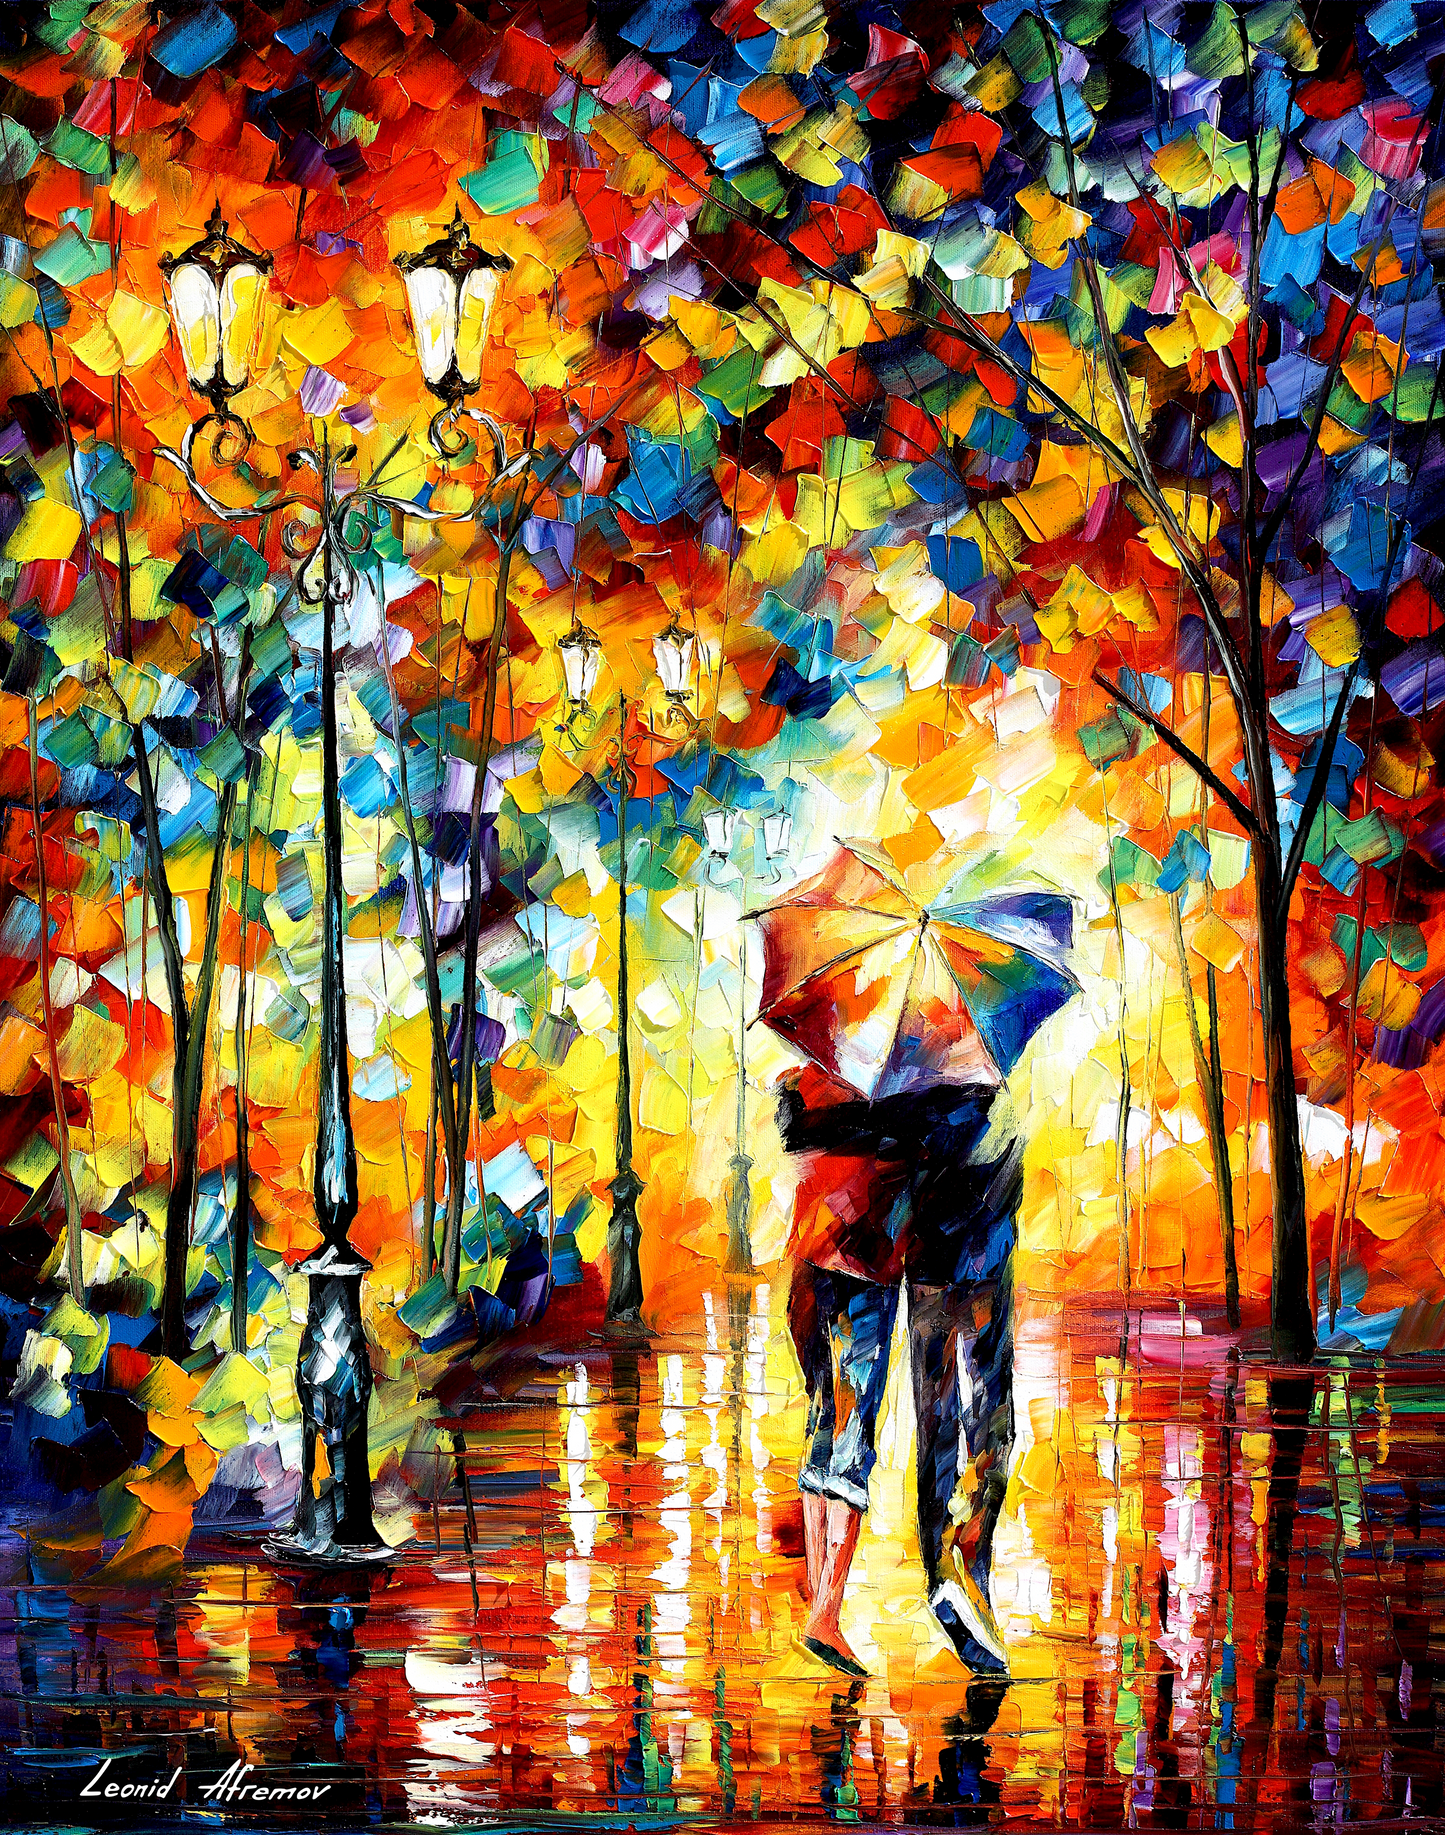 Leonid Afremov Couple Under One Umbrella Paint By Numbers Full Kit